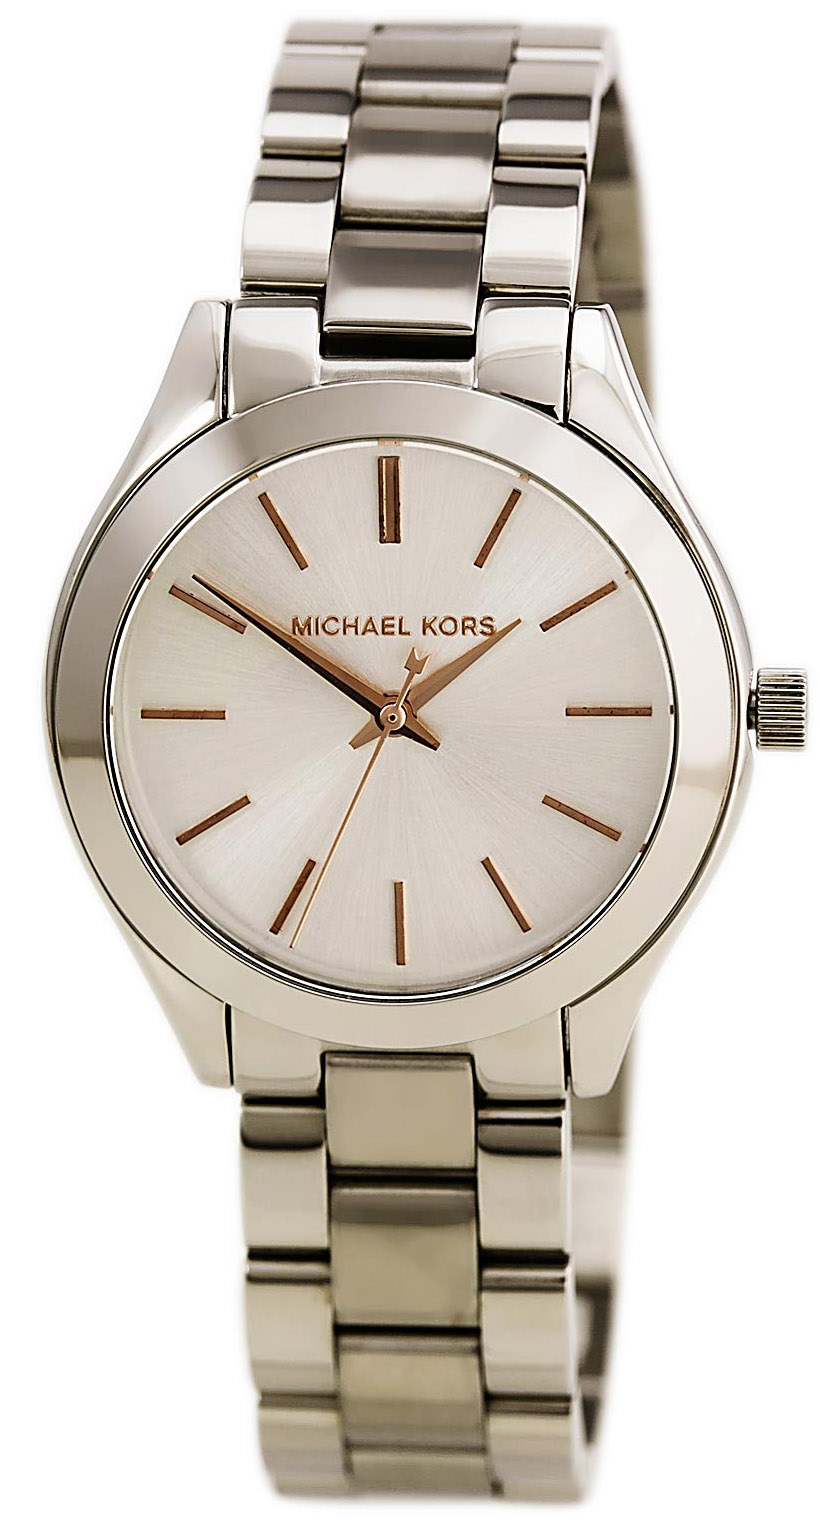 Michael Kors Women's Runway Silver Dial Stainless Steel Watch MK3297A